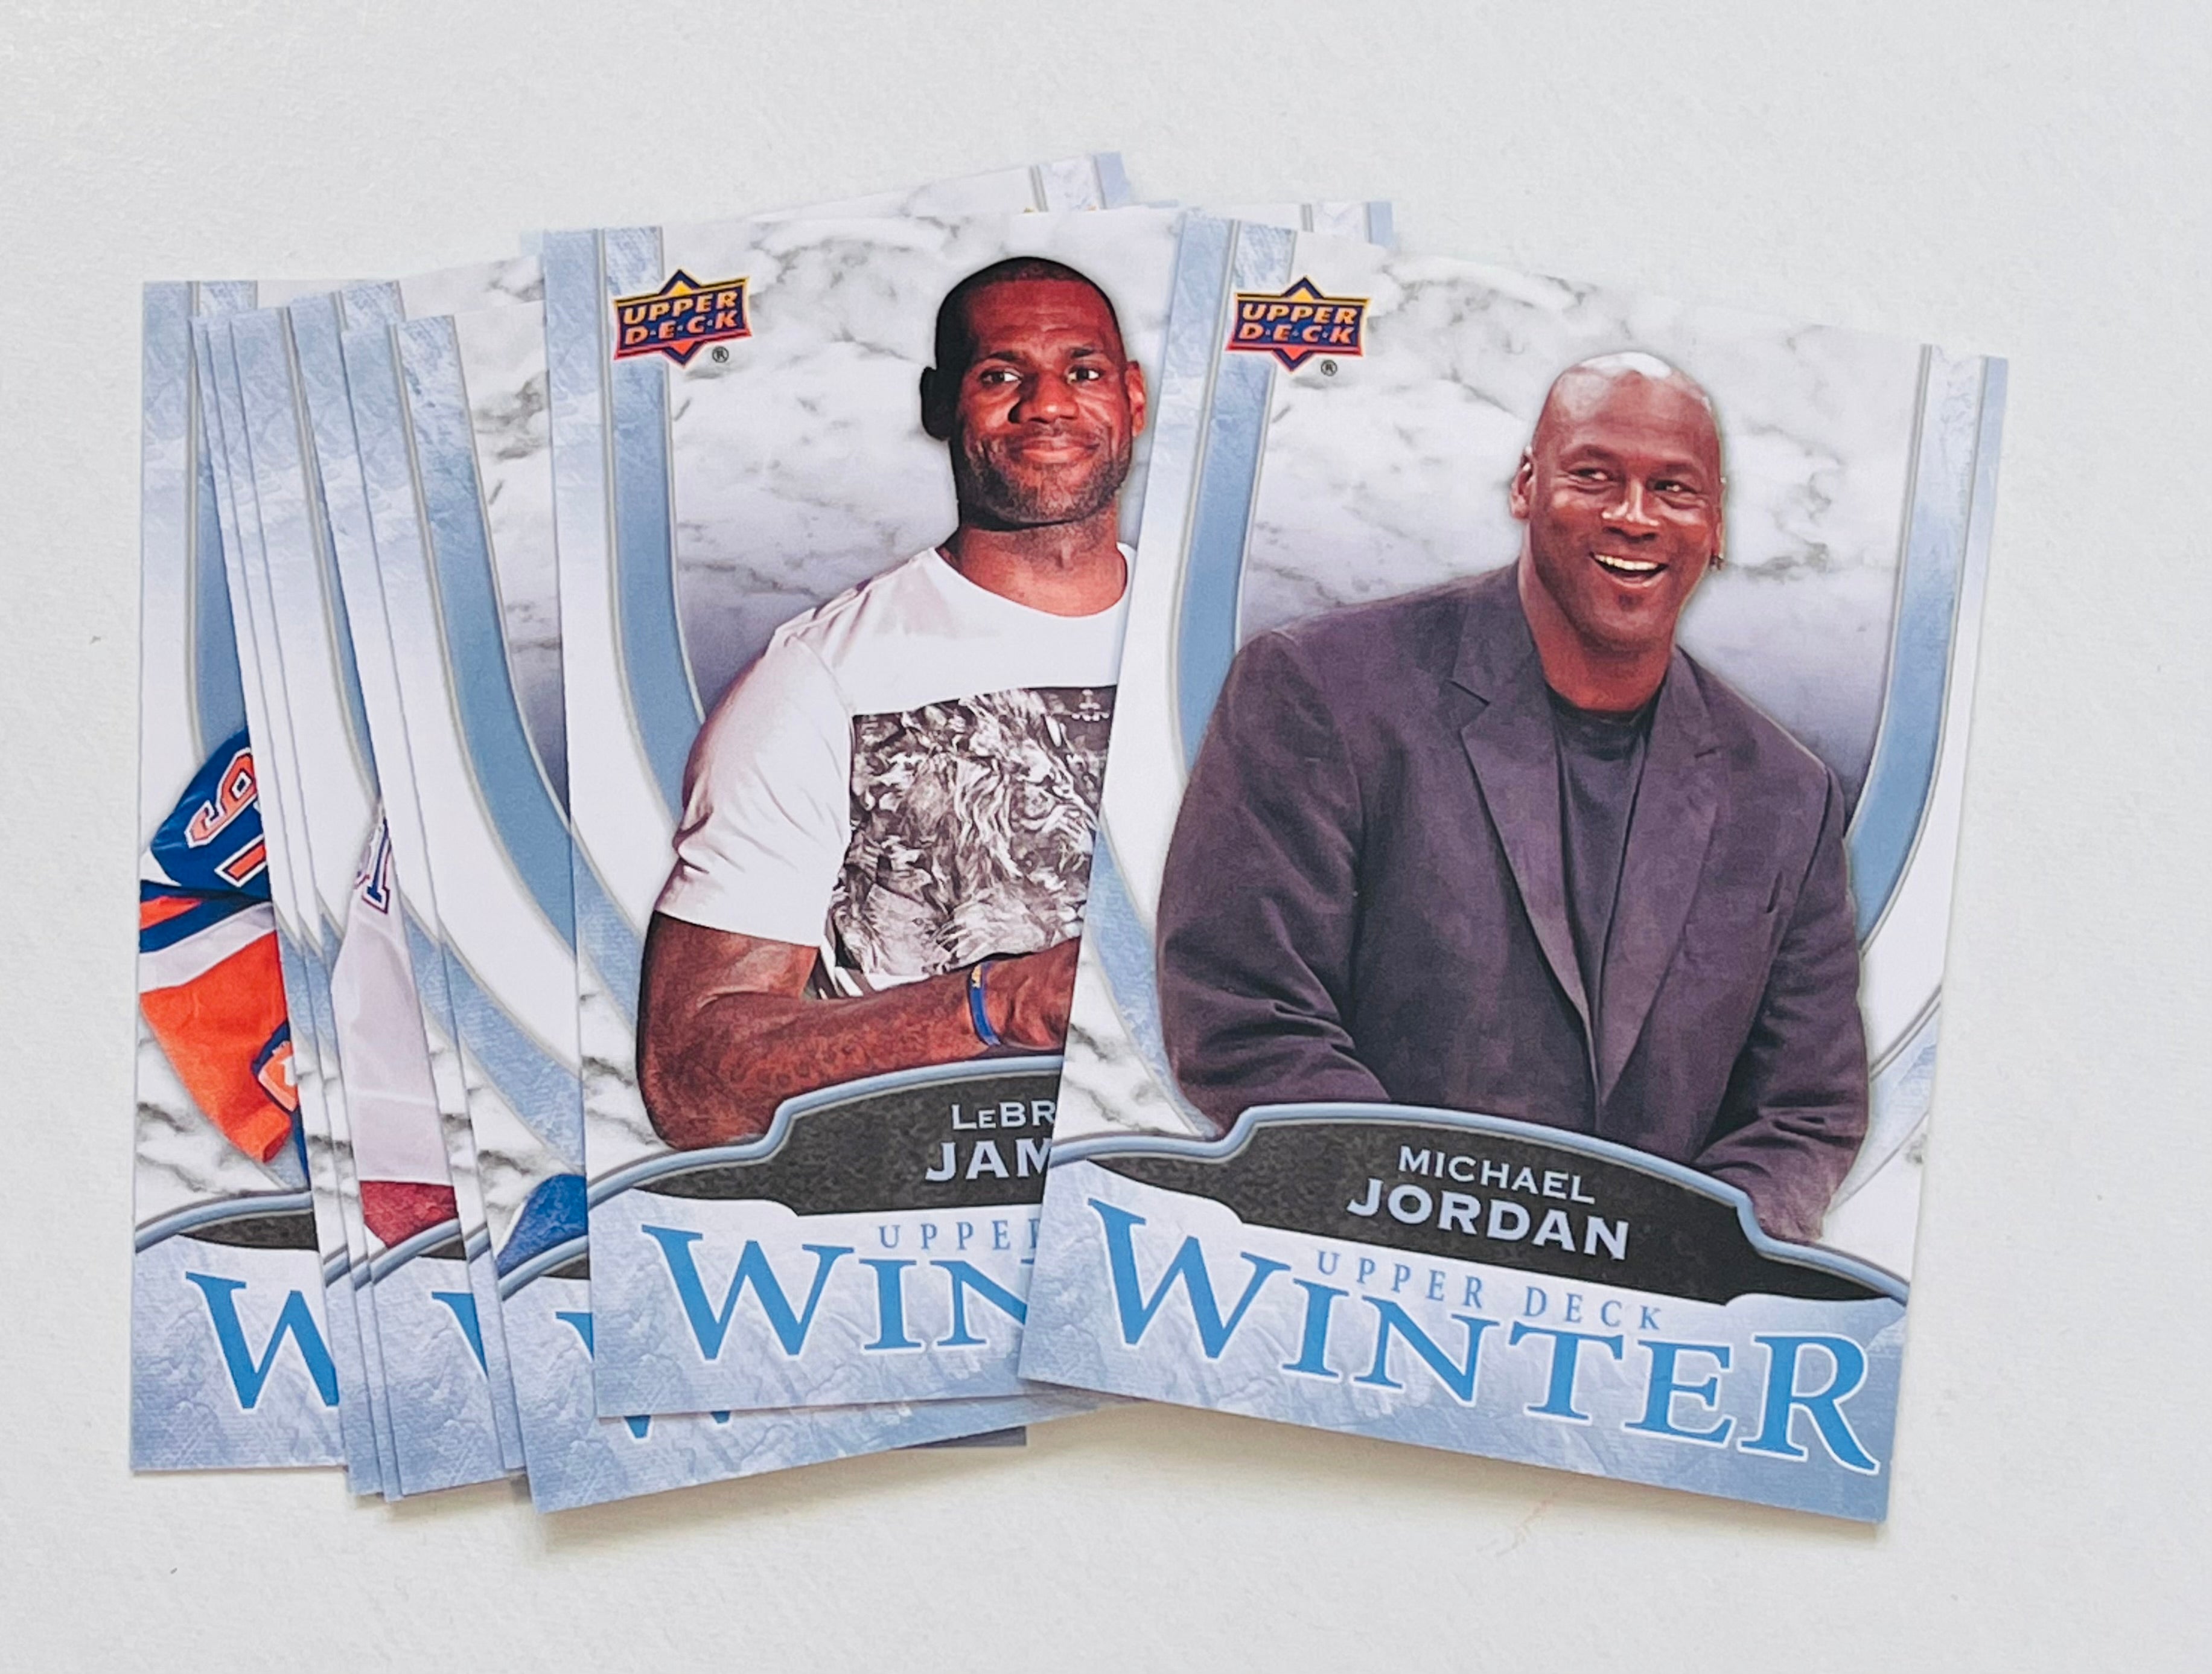 Upper Deck limited issue promo cards set: LeBron, Jordan,McDavid and more set